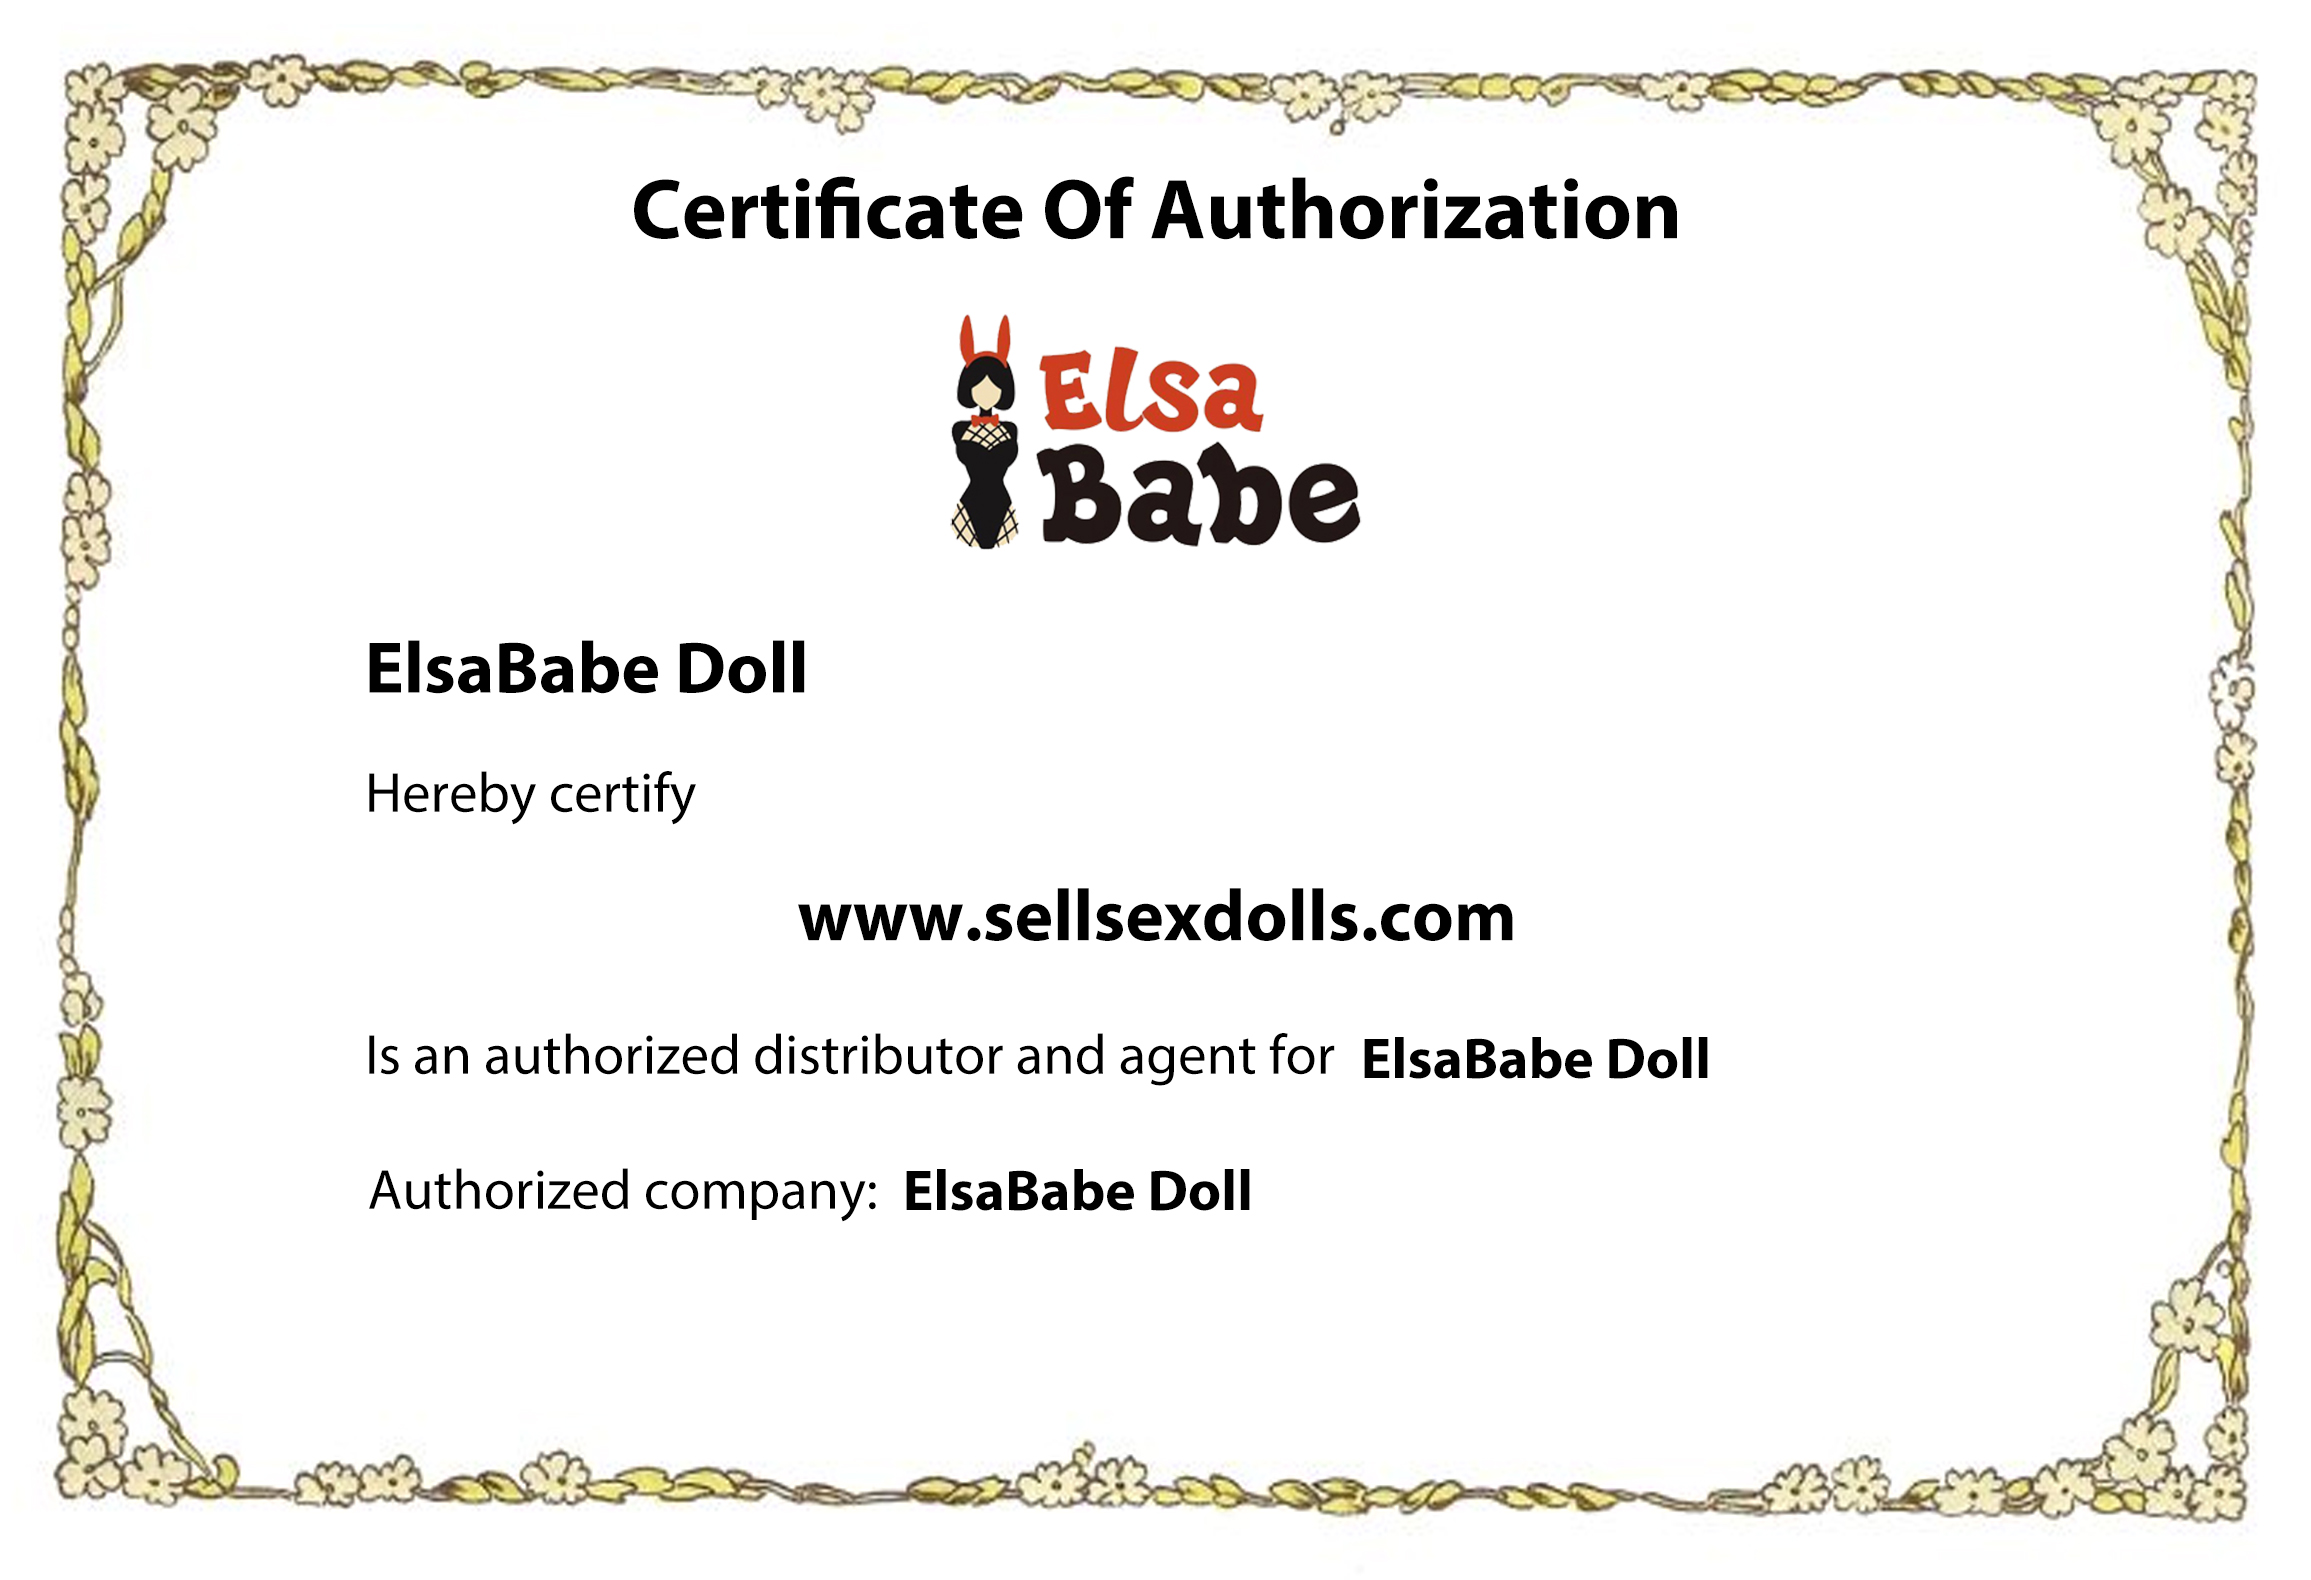 elsababe doll certificate